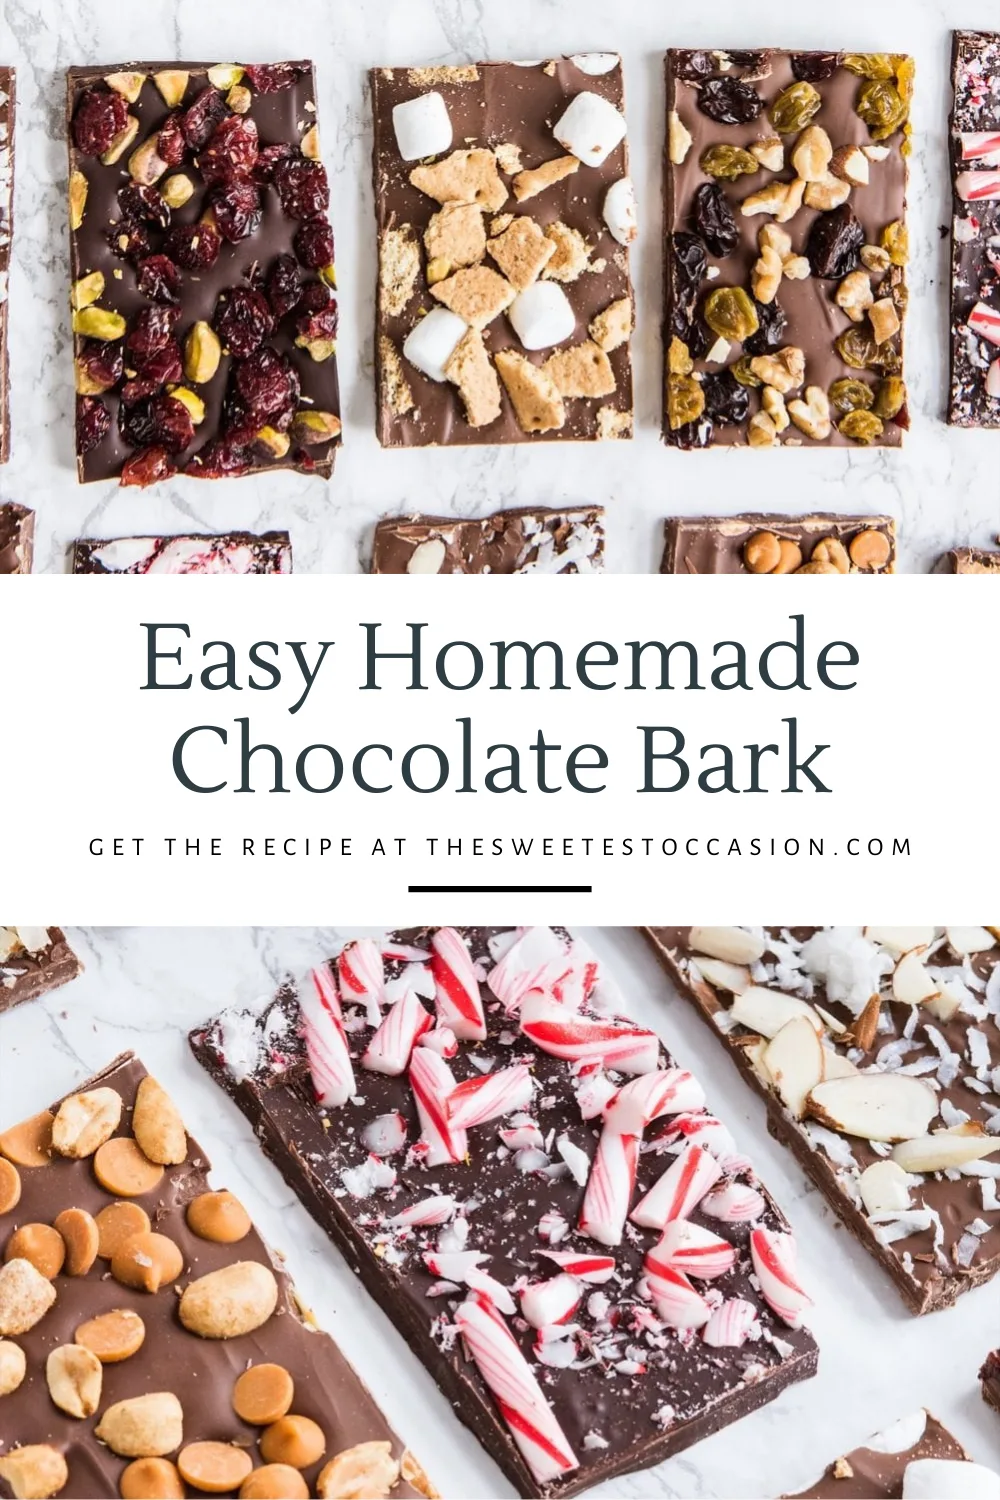 How to Make Chocolate Bark